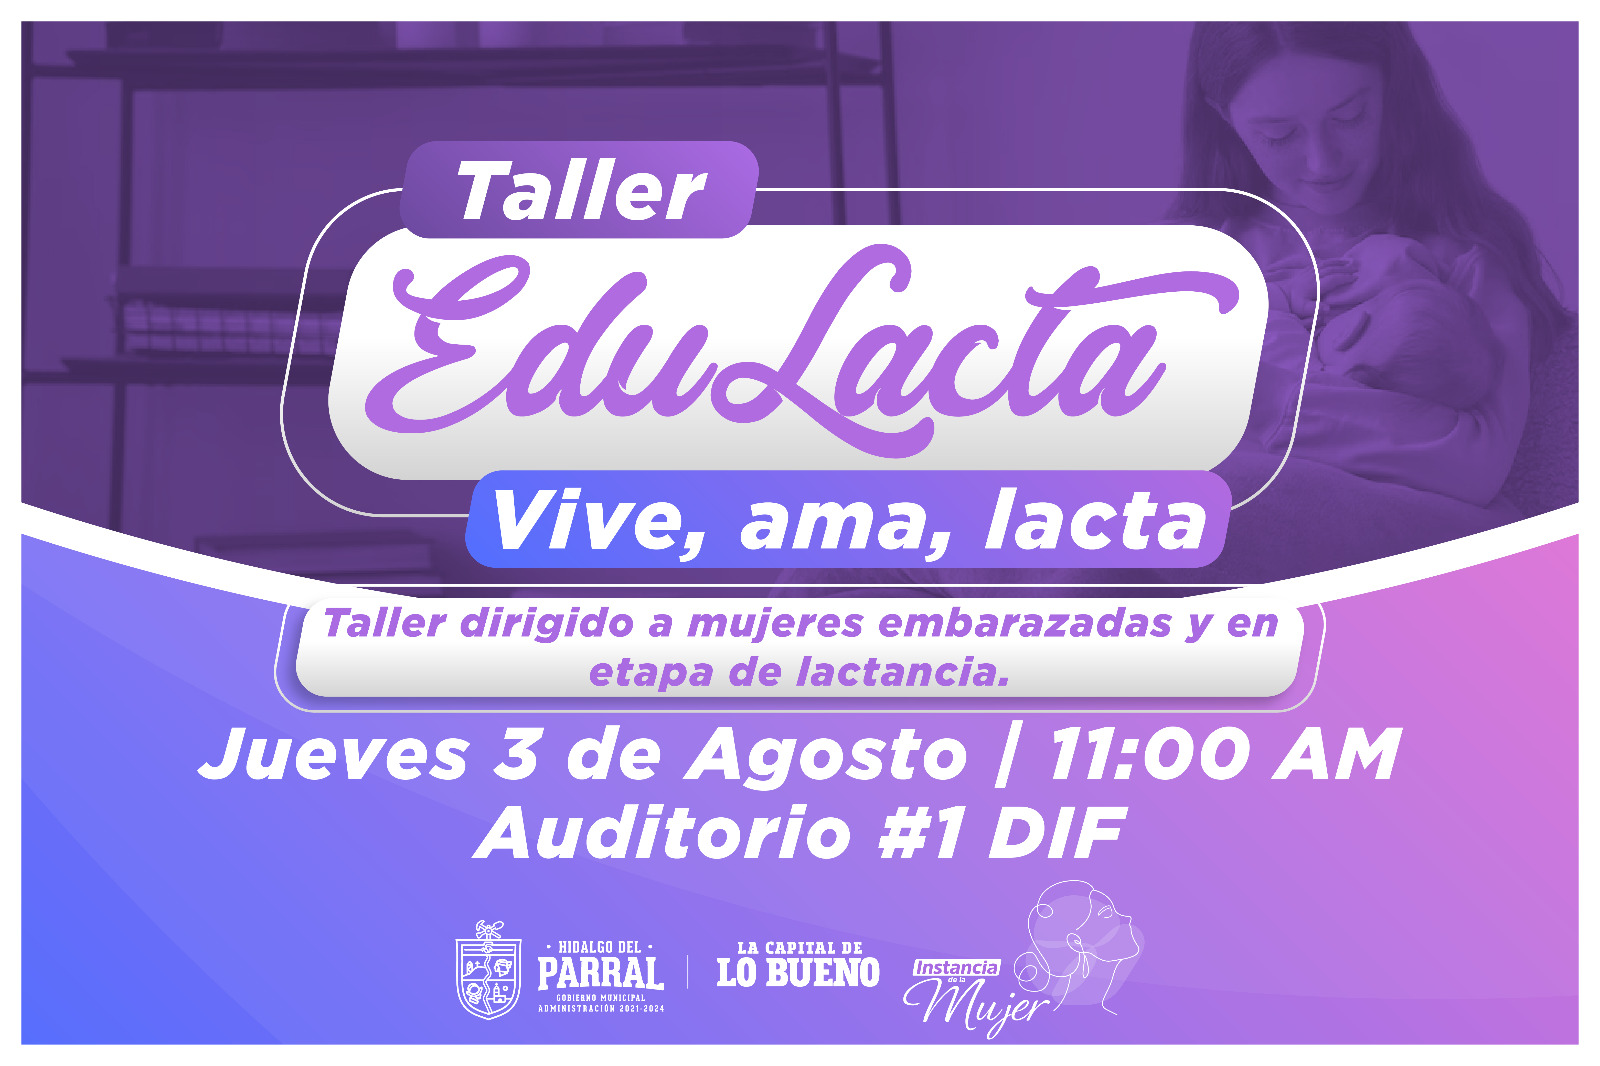 Invita Gobierno De Parral Al Taller “edulacta” Tribuna Parral